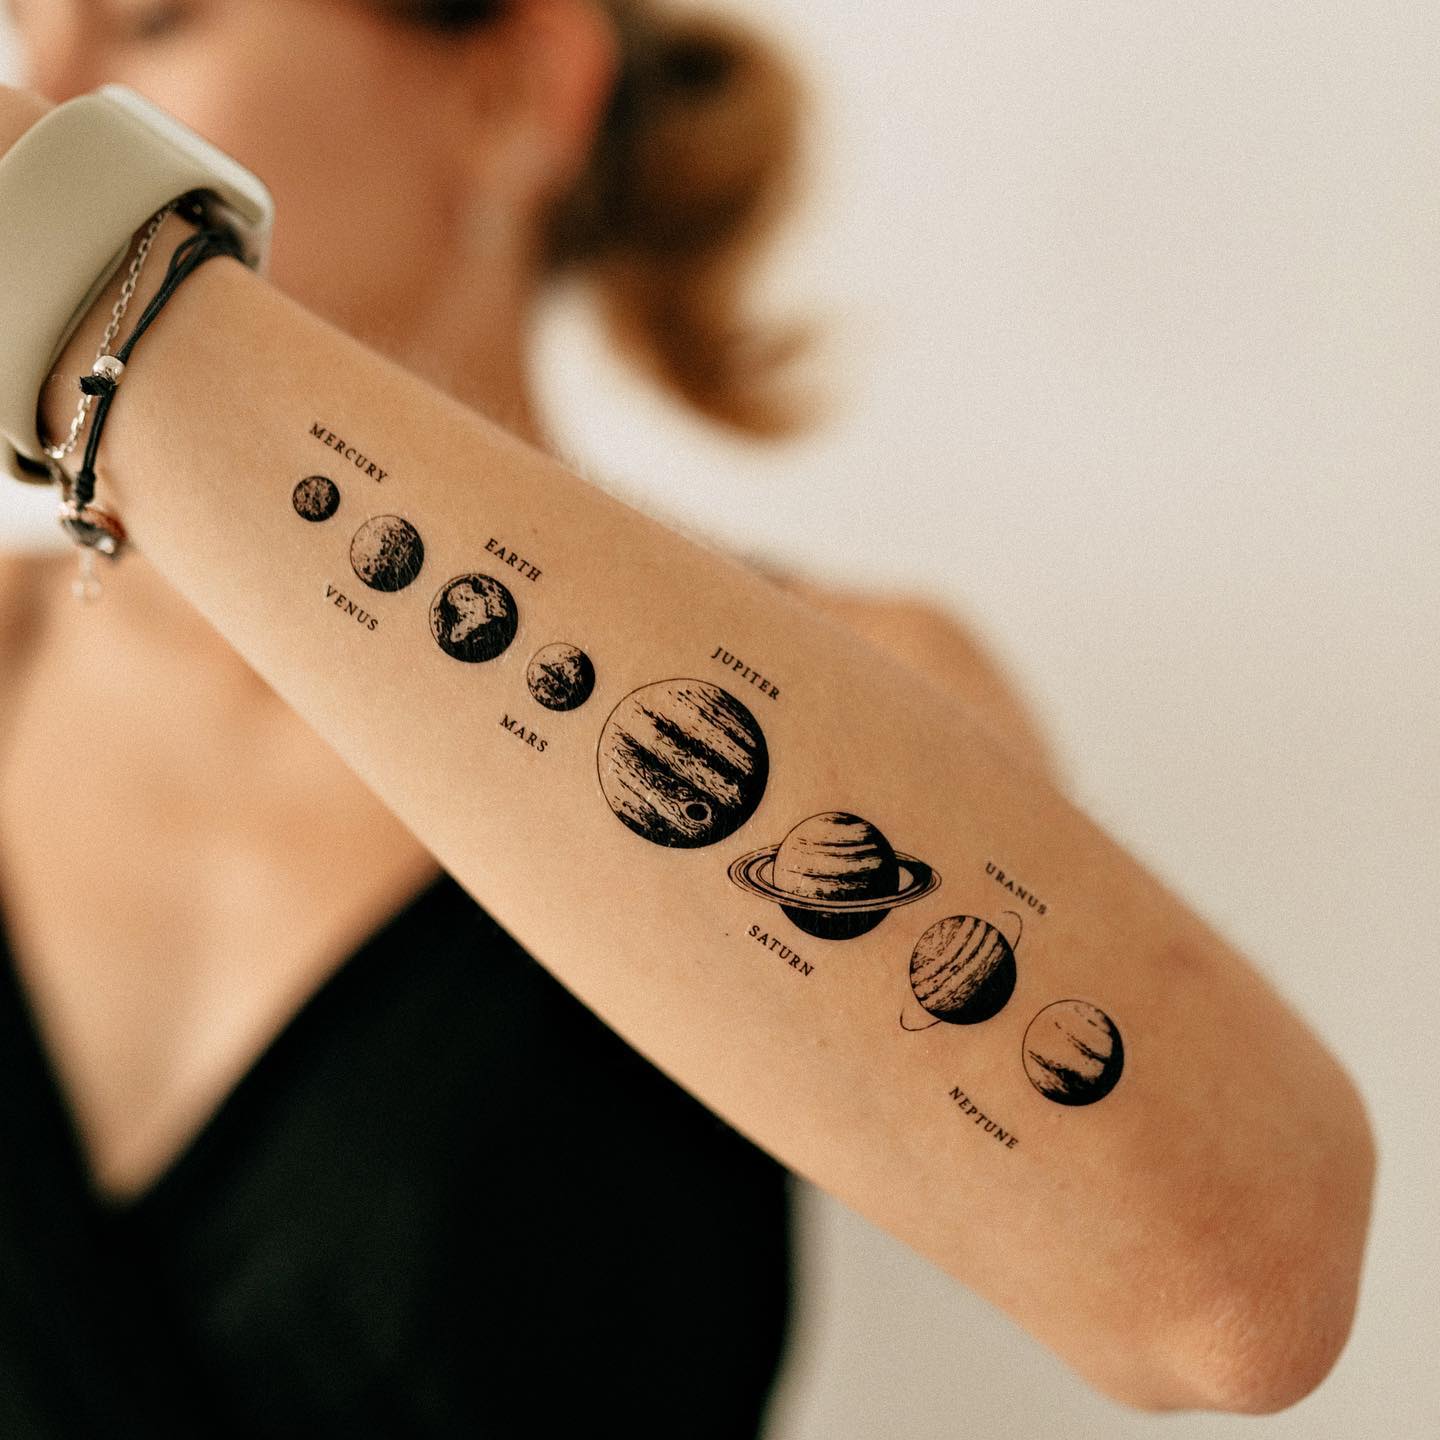 Space Design Tattoo on Arm